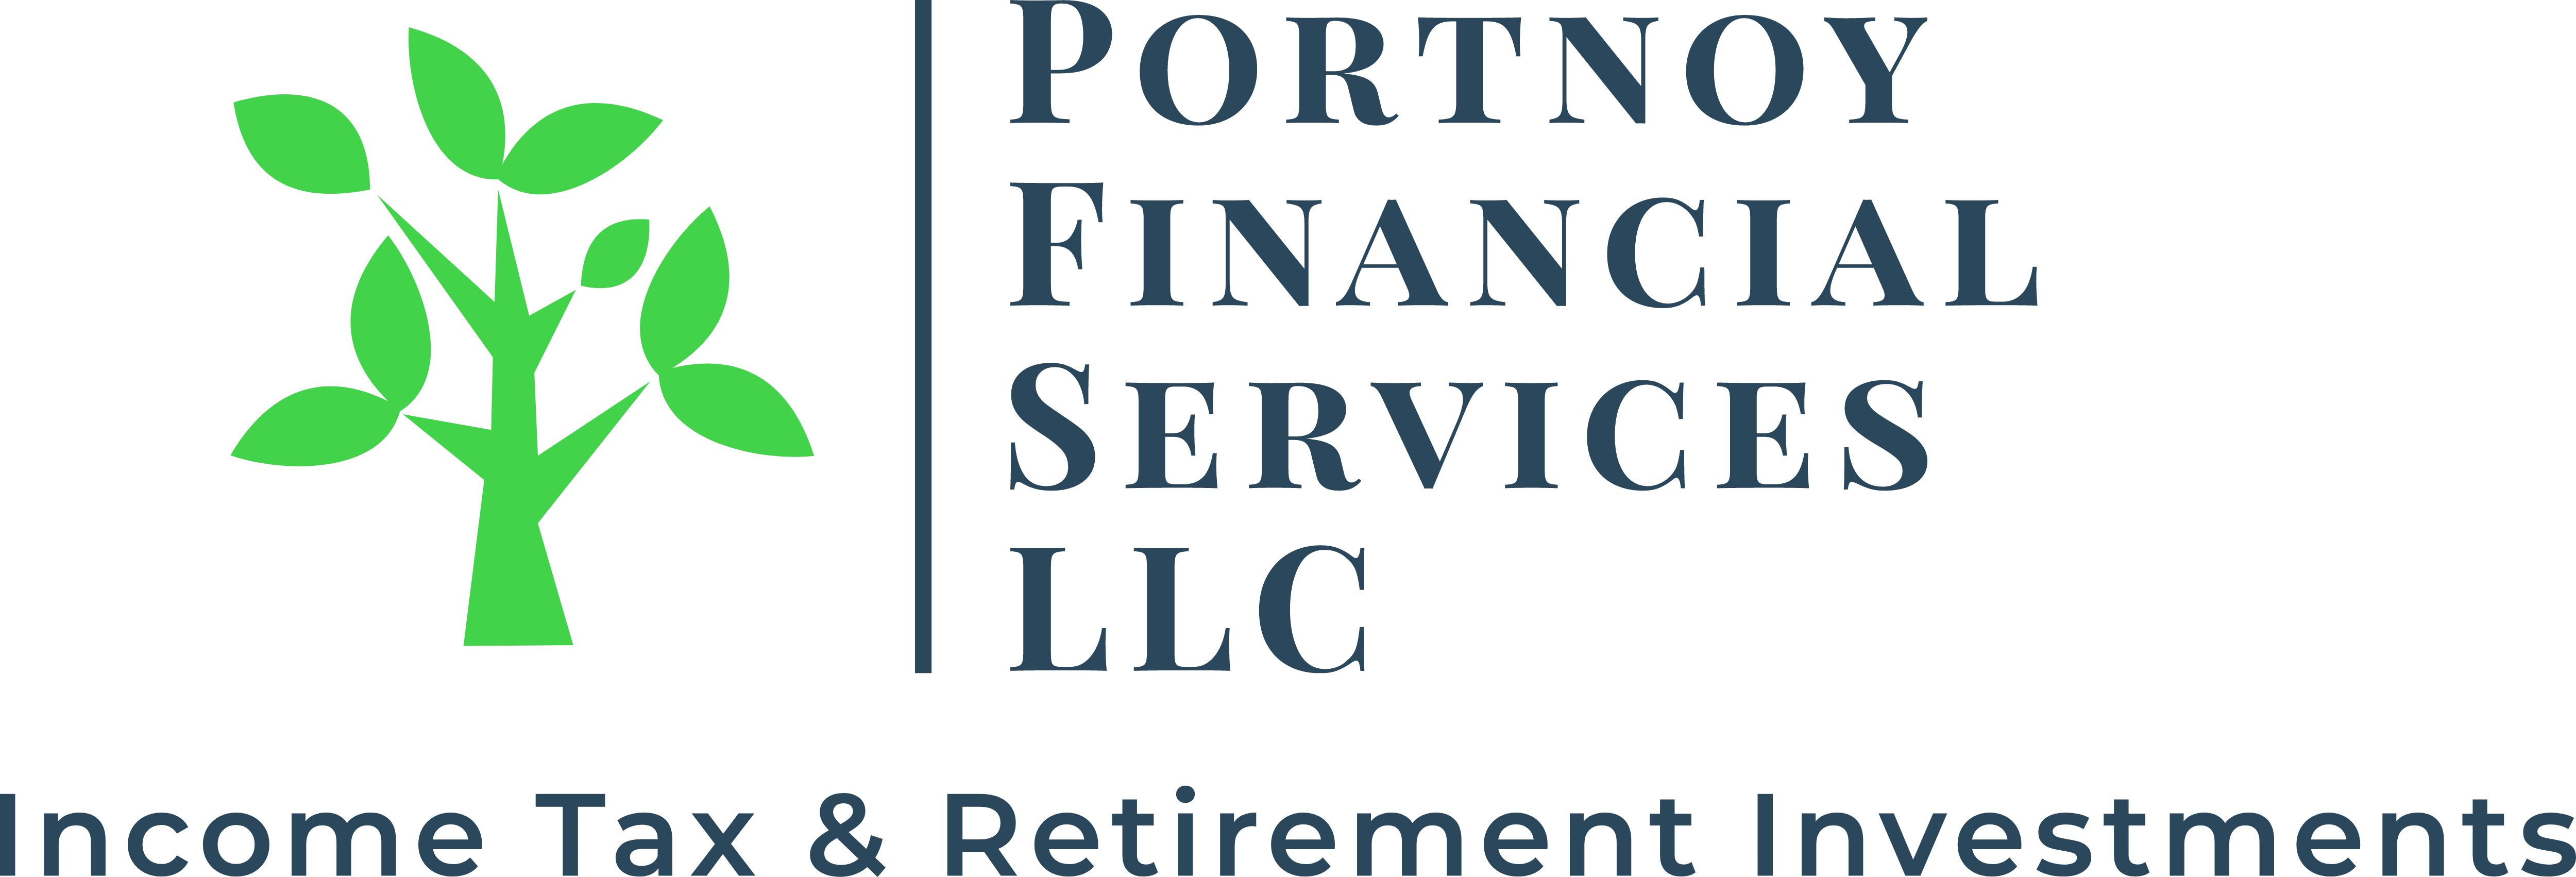 Portnoy Financial Services LLC